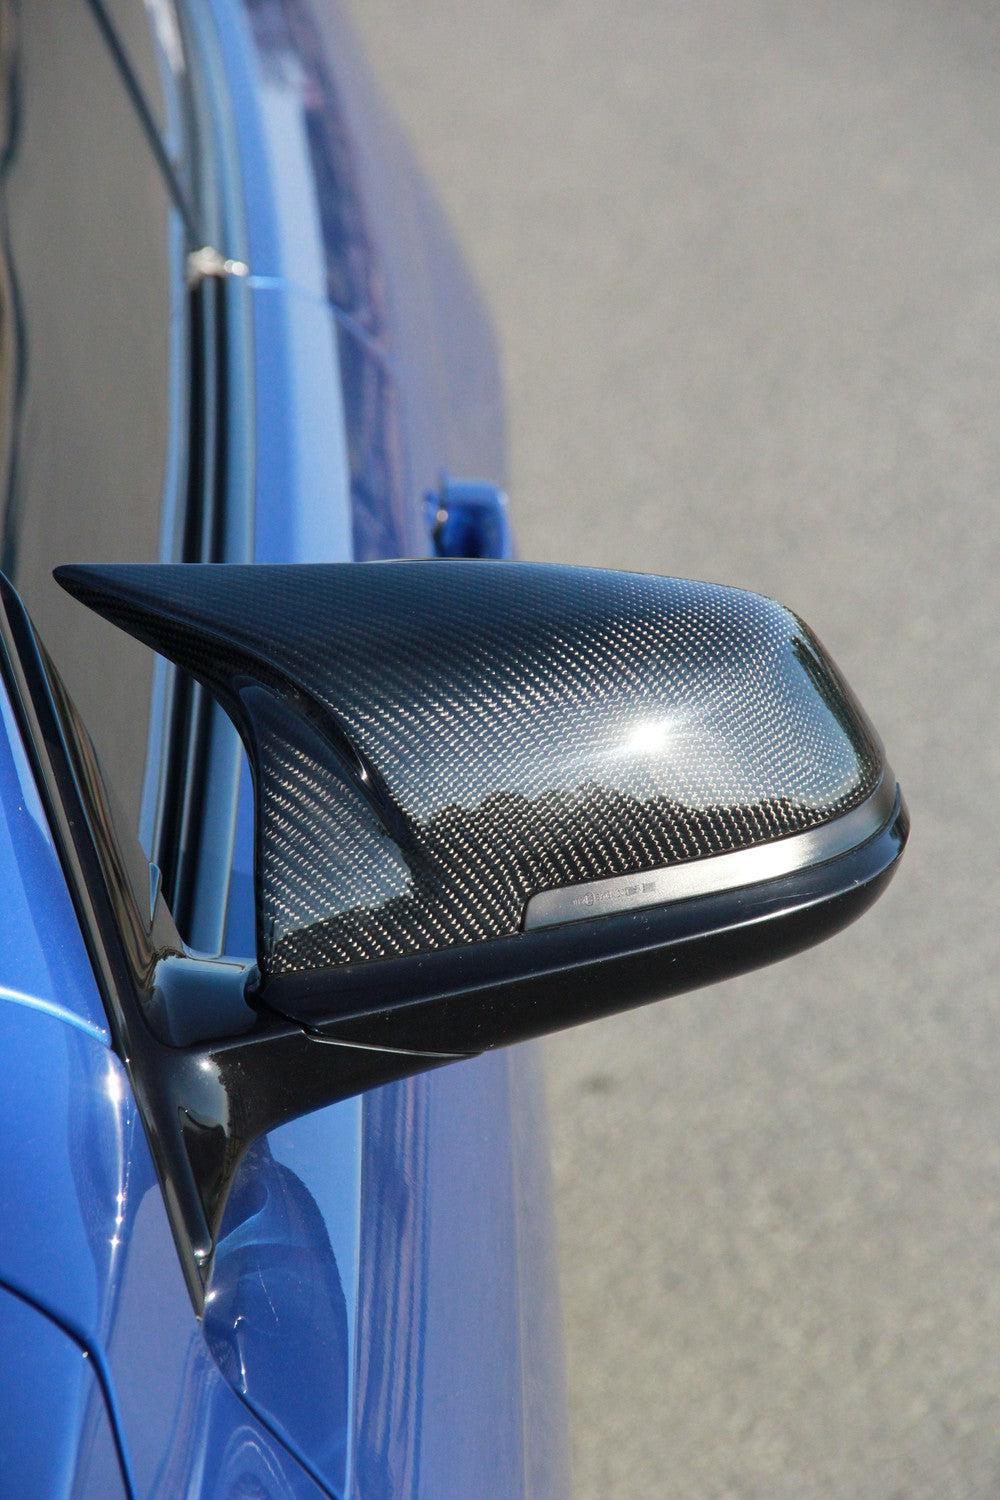 M Style Carbon Fiber Mirror Cap Set - BMW F30 3 Series | F32 4 Series | F22 2 Series